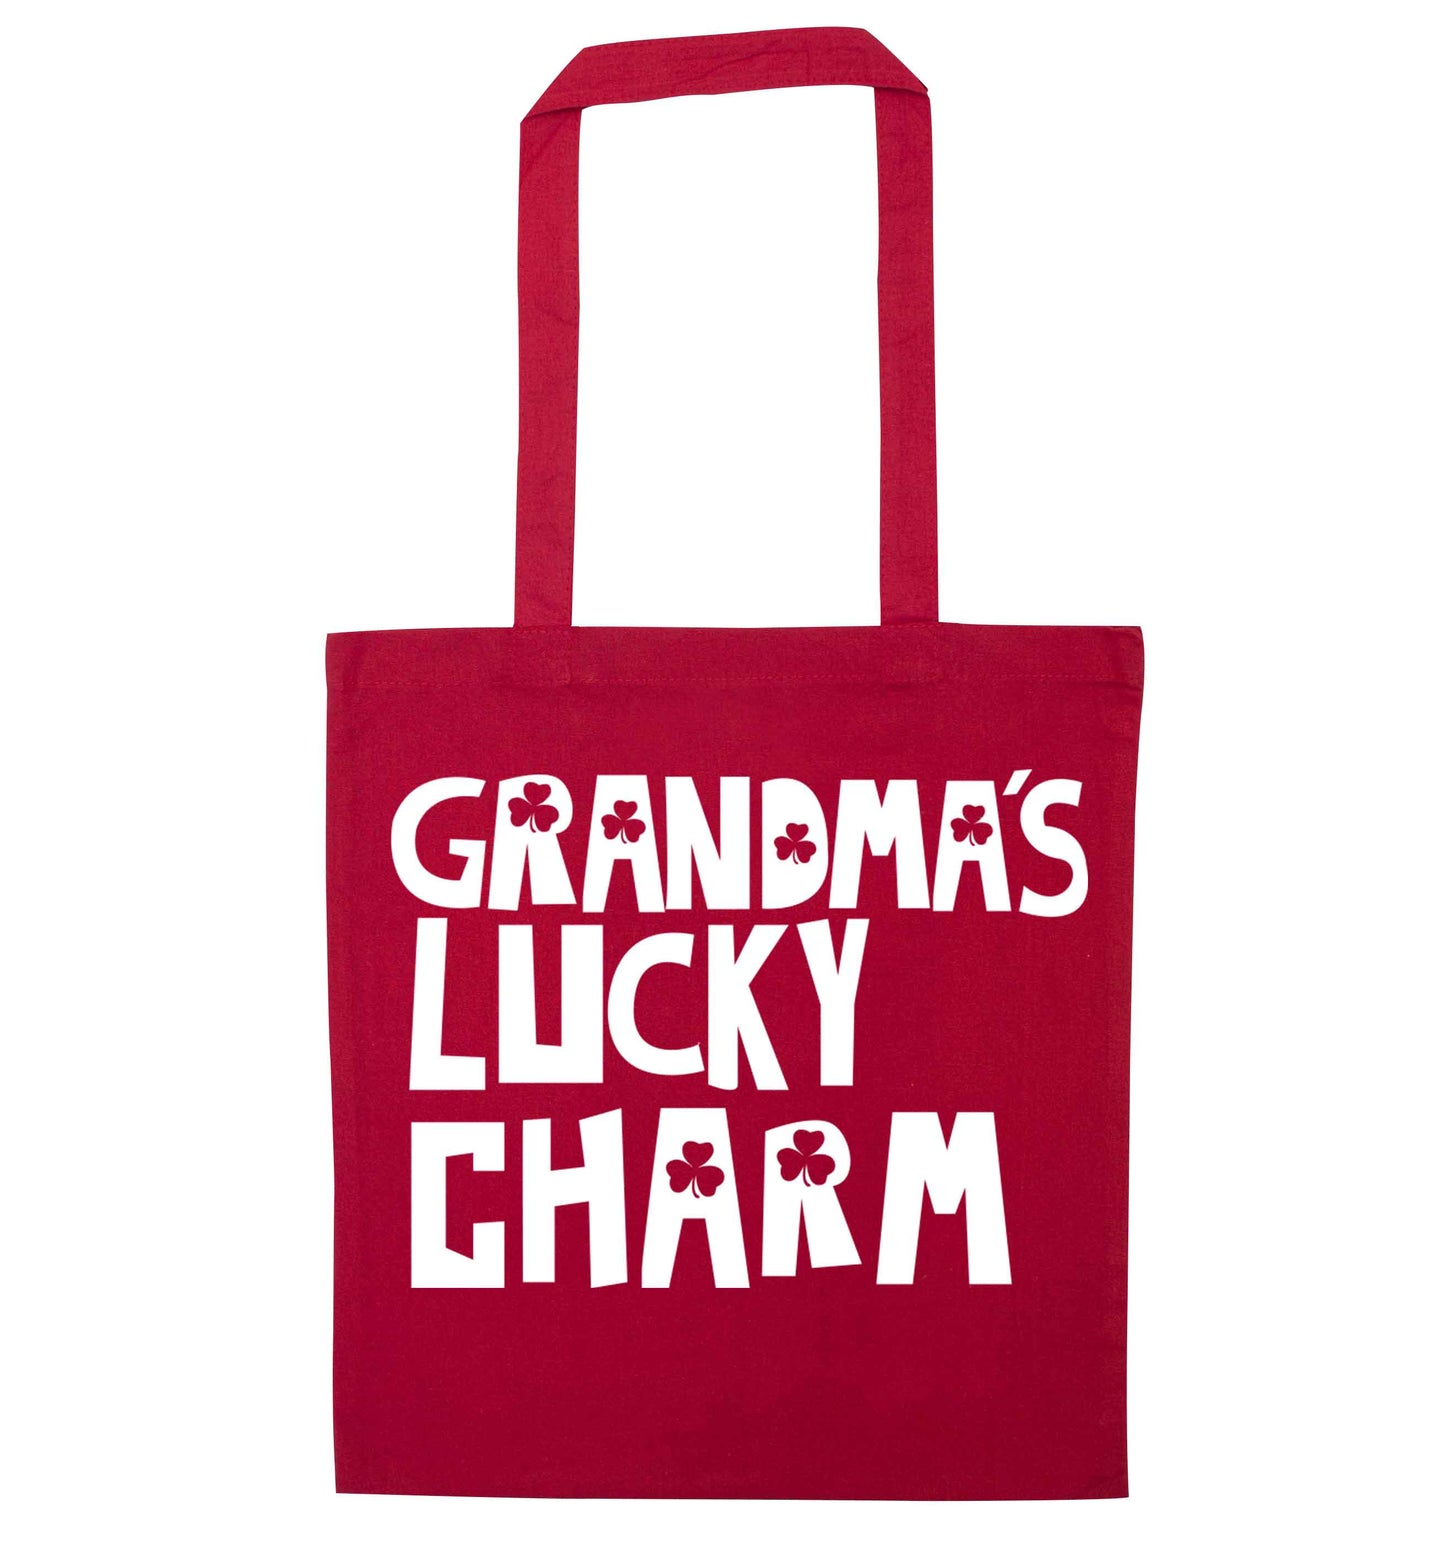 Grandma's lucky charm red tote bag